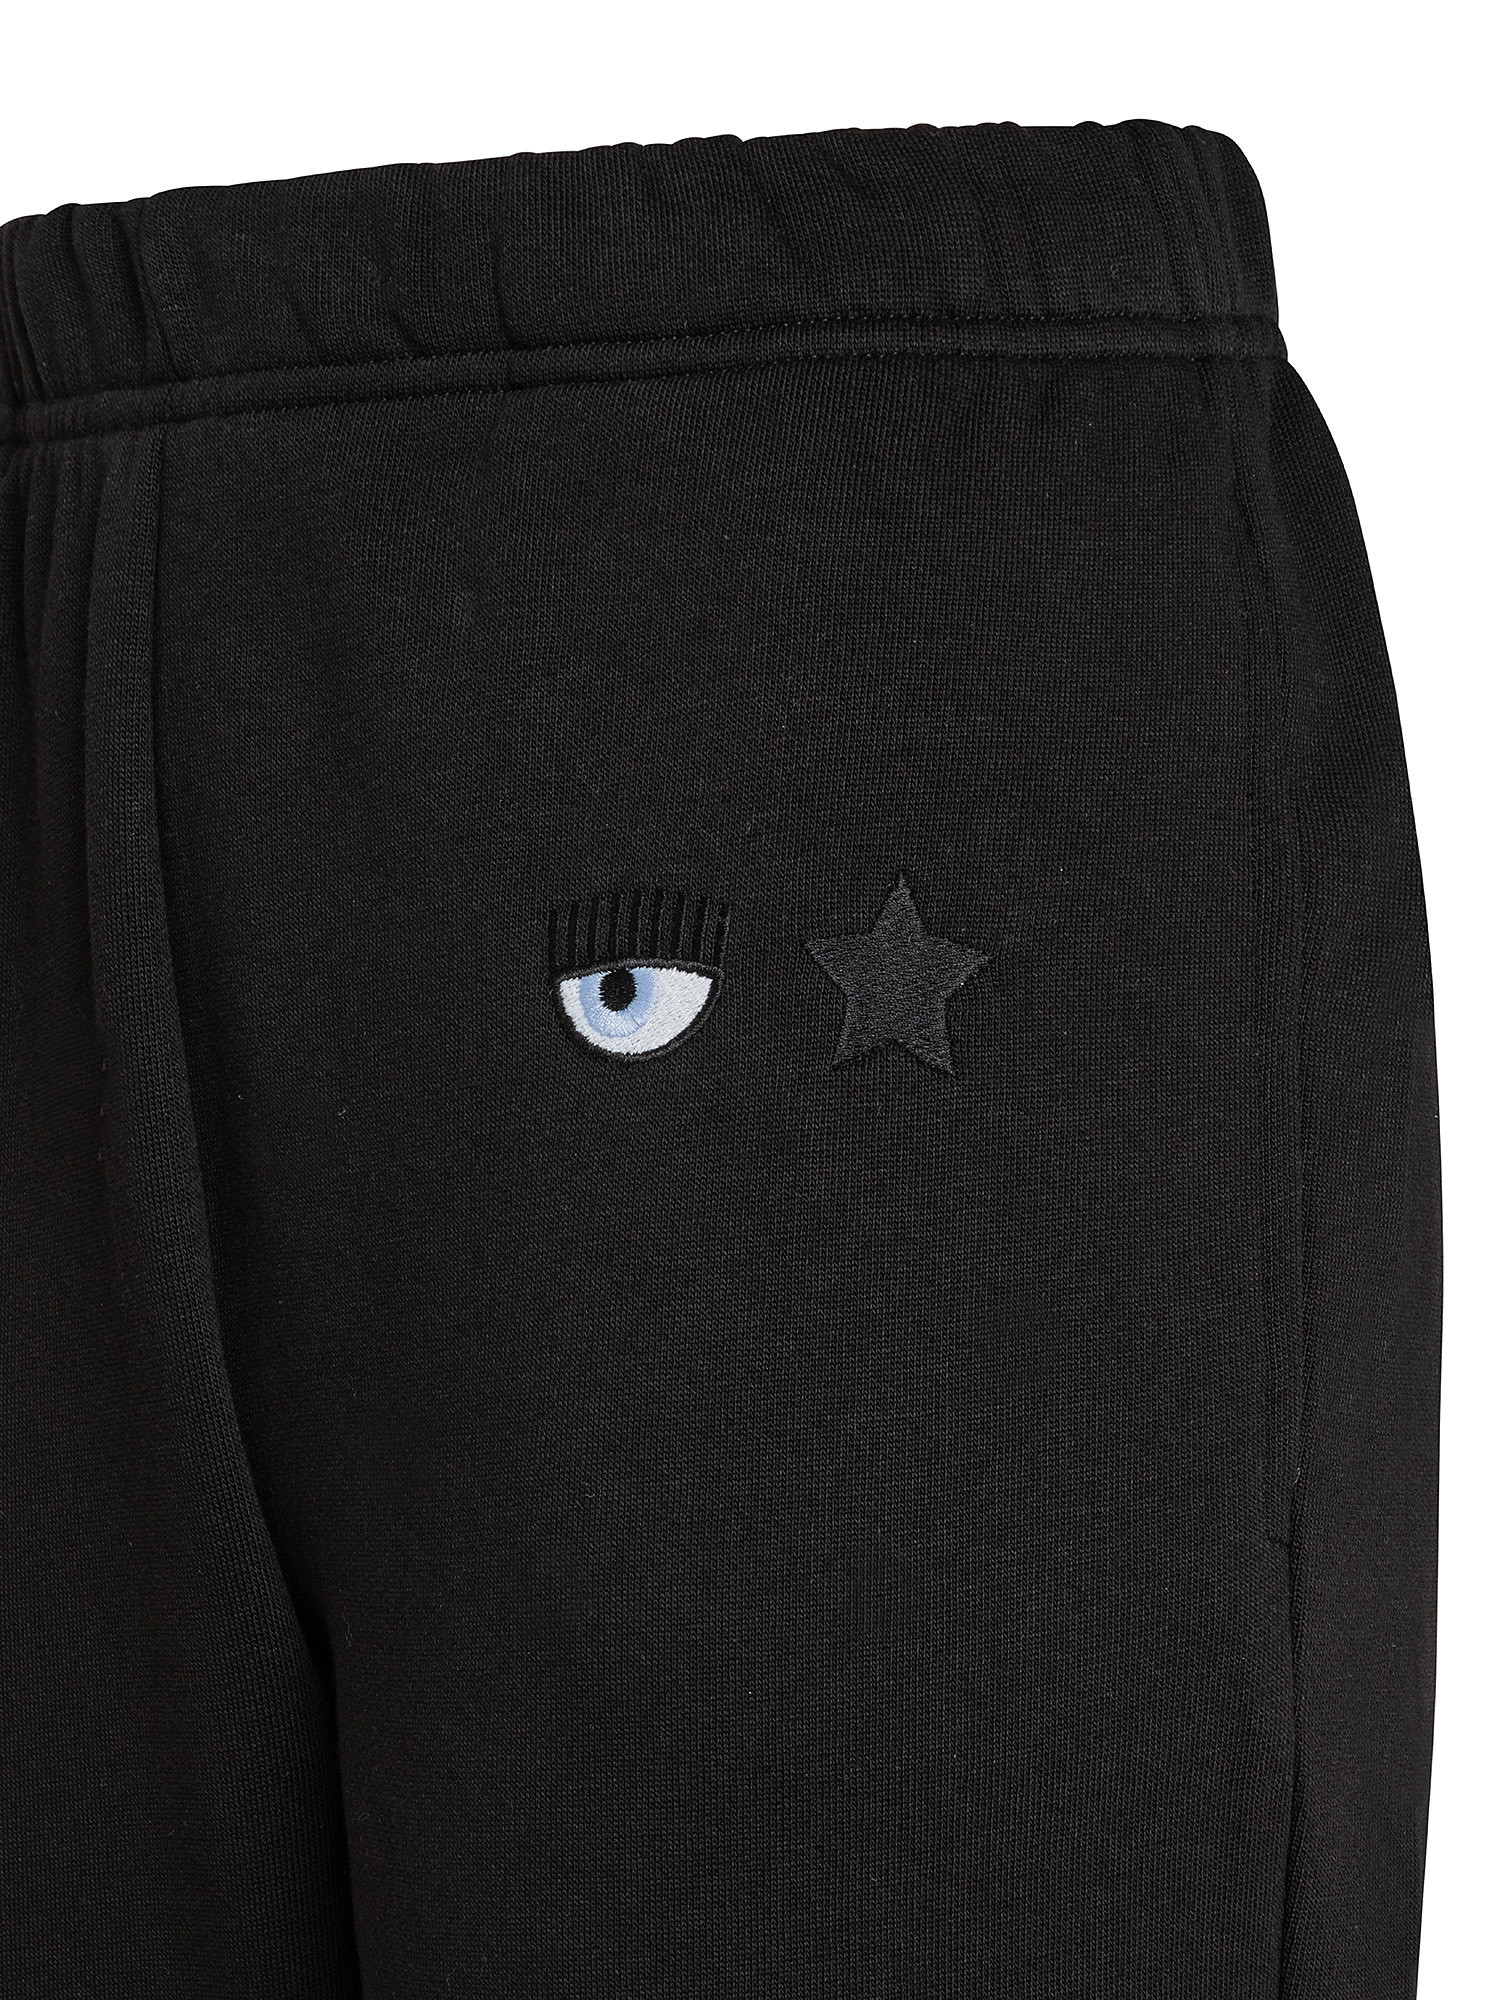 Pantaloni Eye Star, Nero, large image number 2